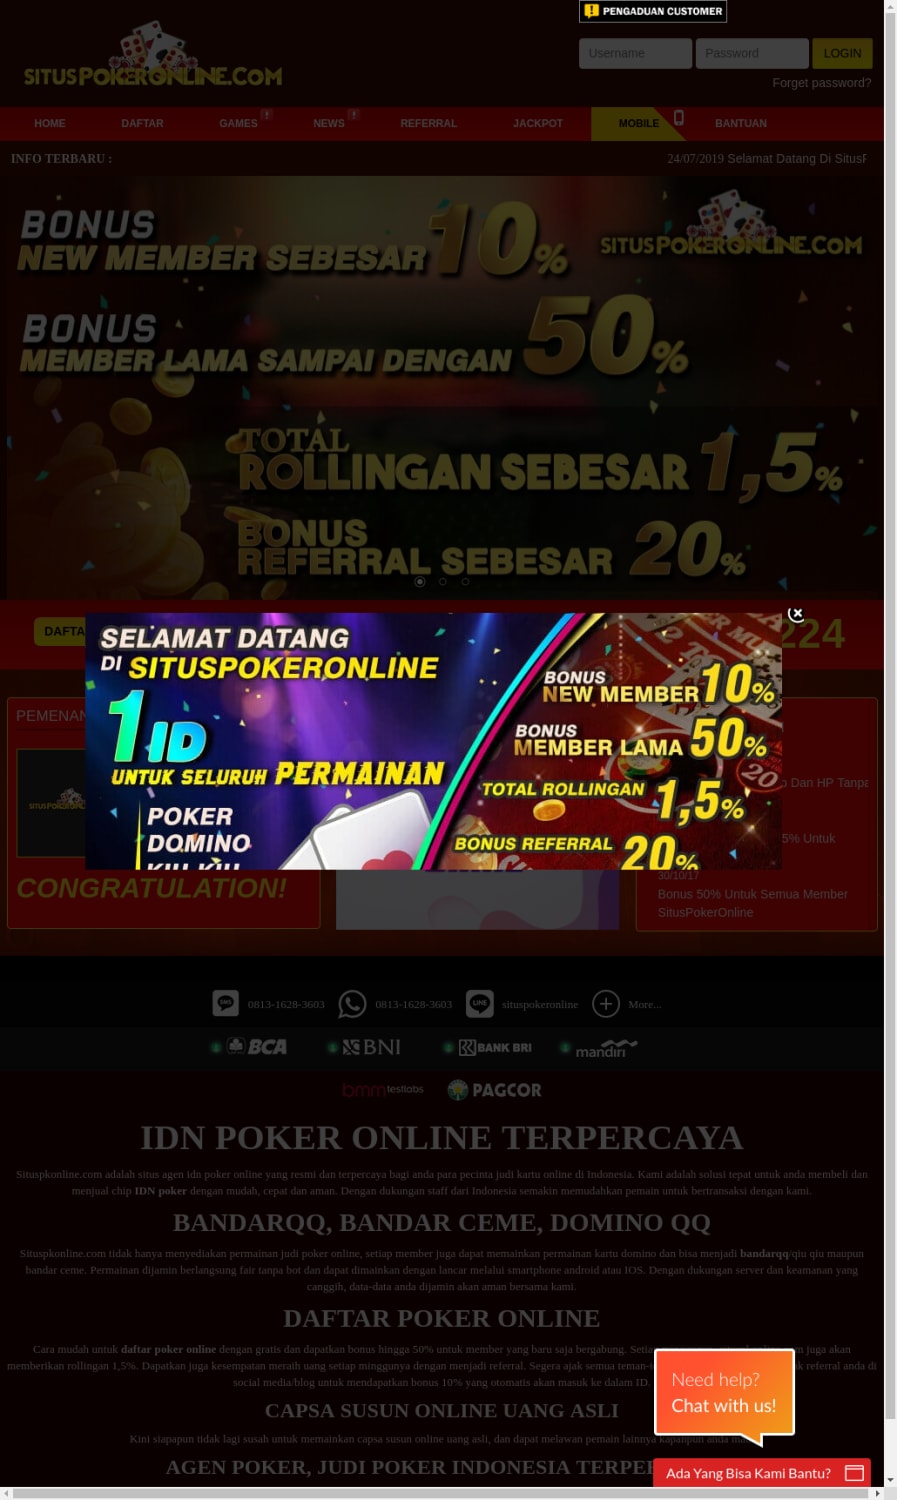 IDN Poker, Bandarqq, Daftar Poker Online Terpercaya, Capsa Susun